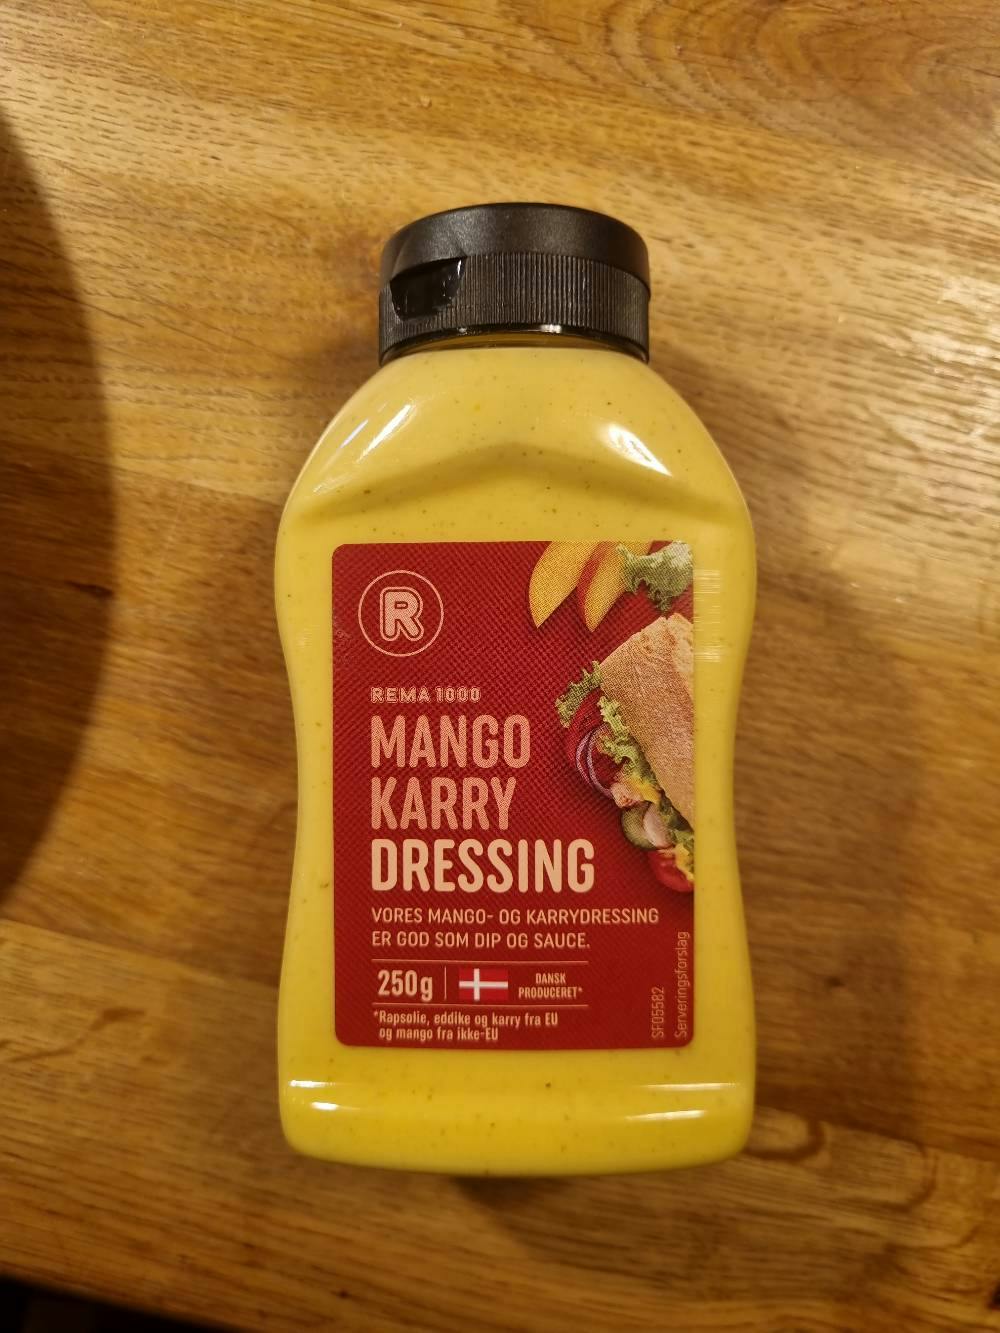 Mango karry dressing, Rema 1000